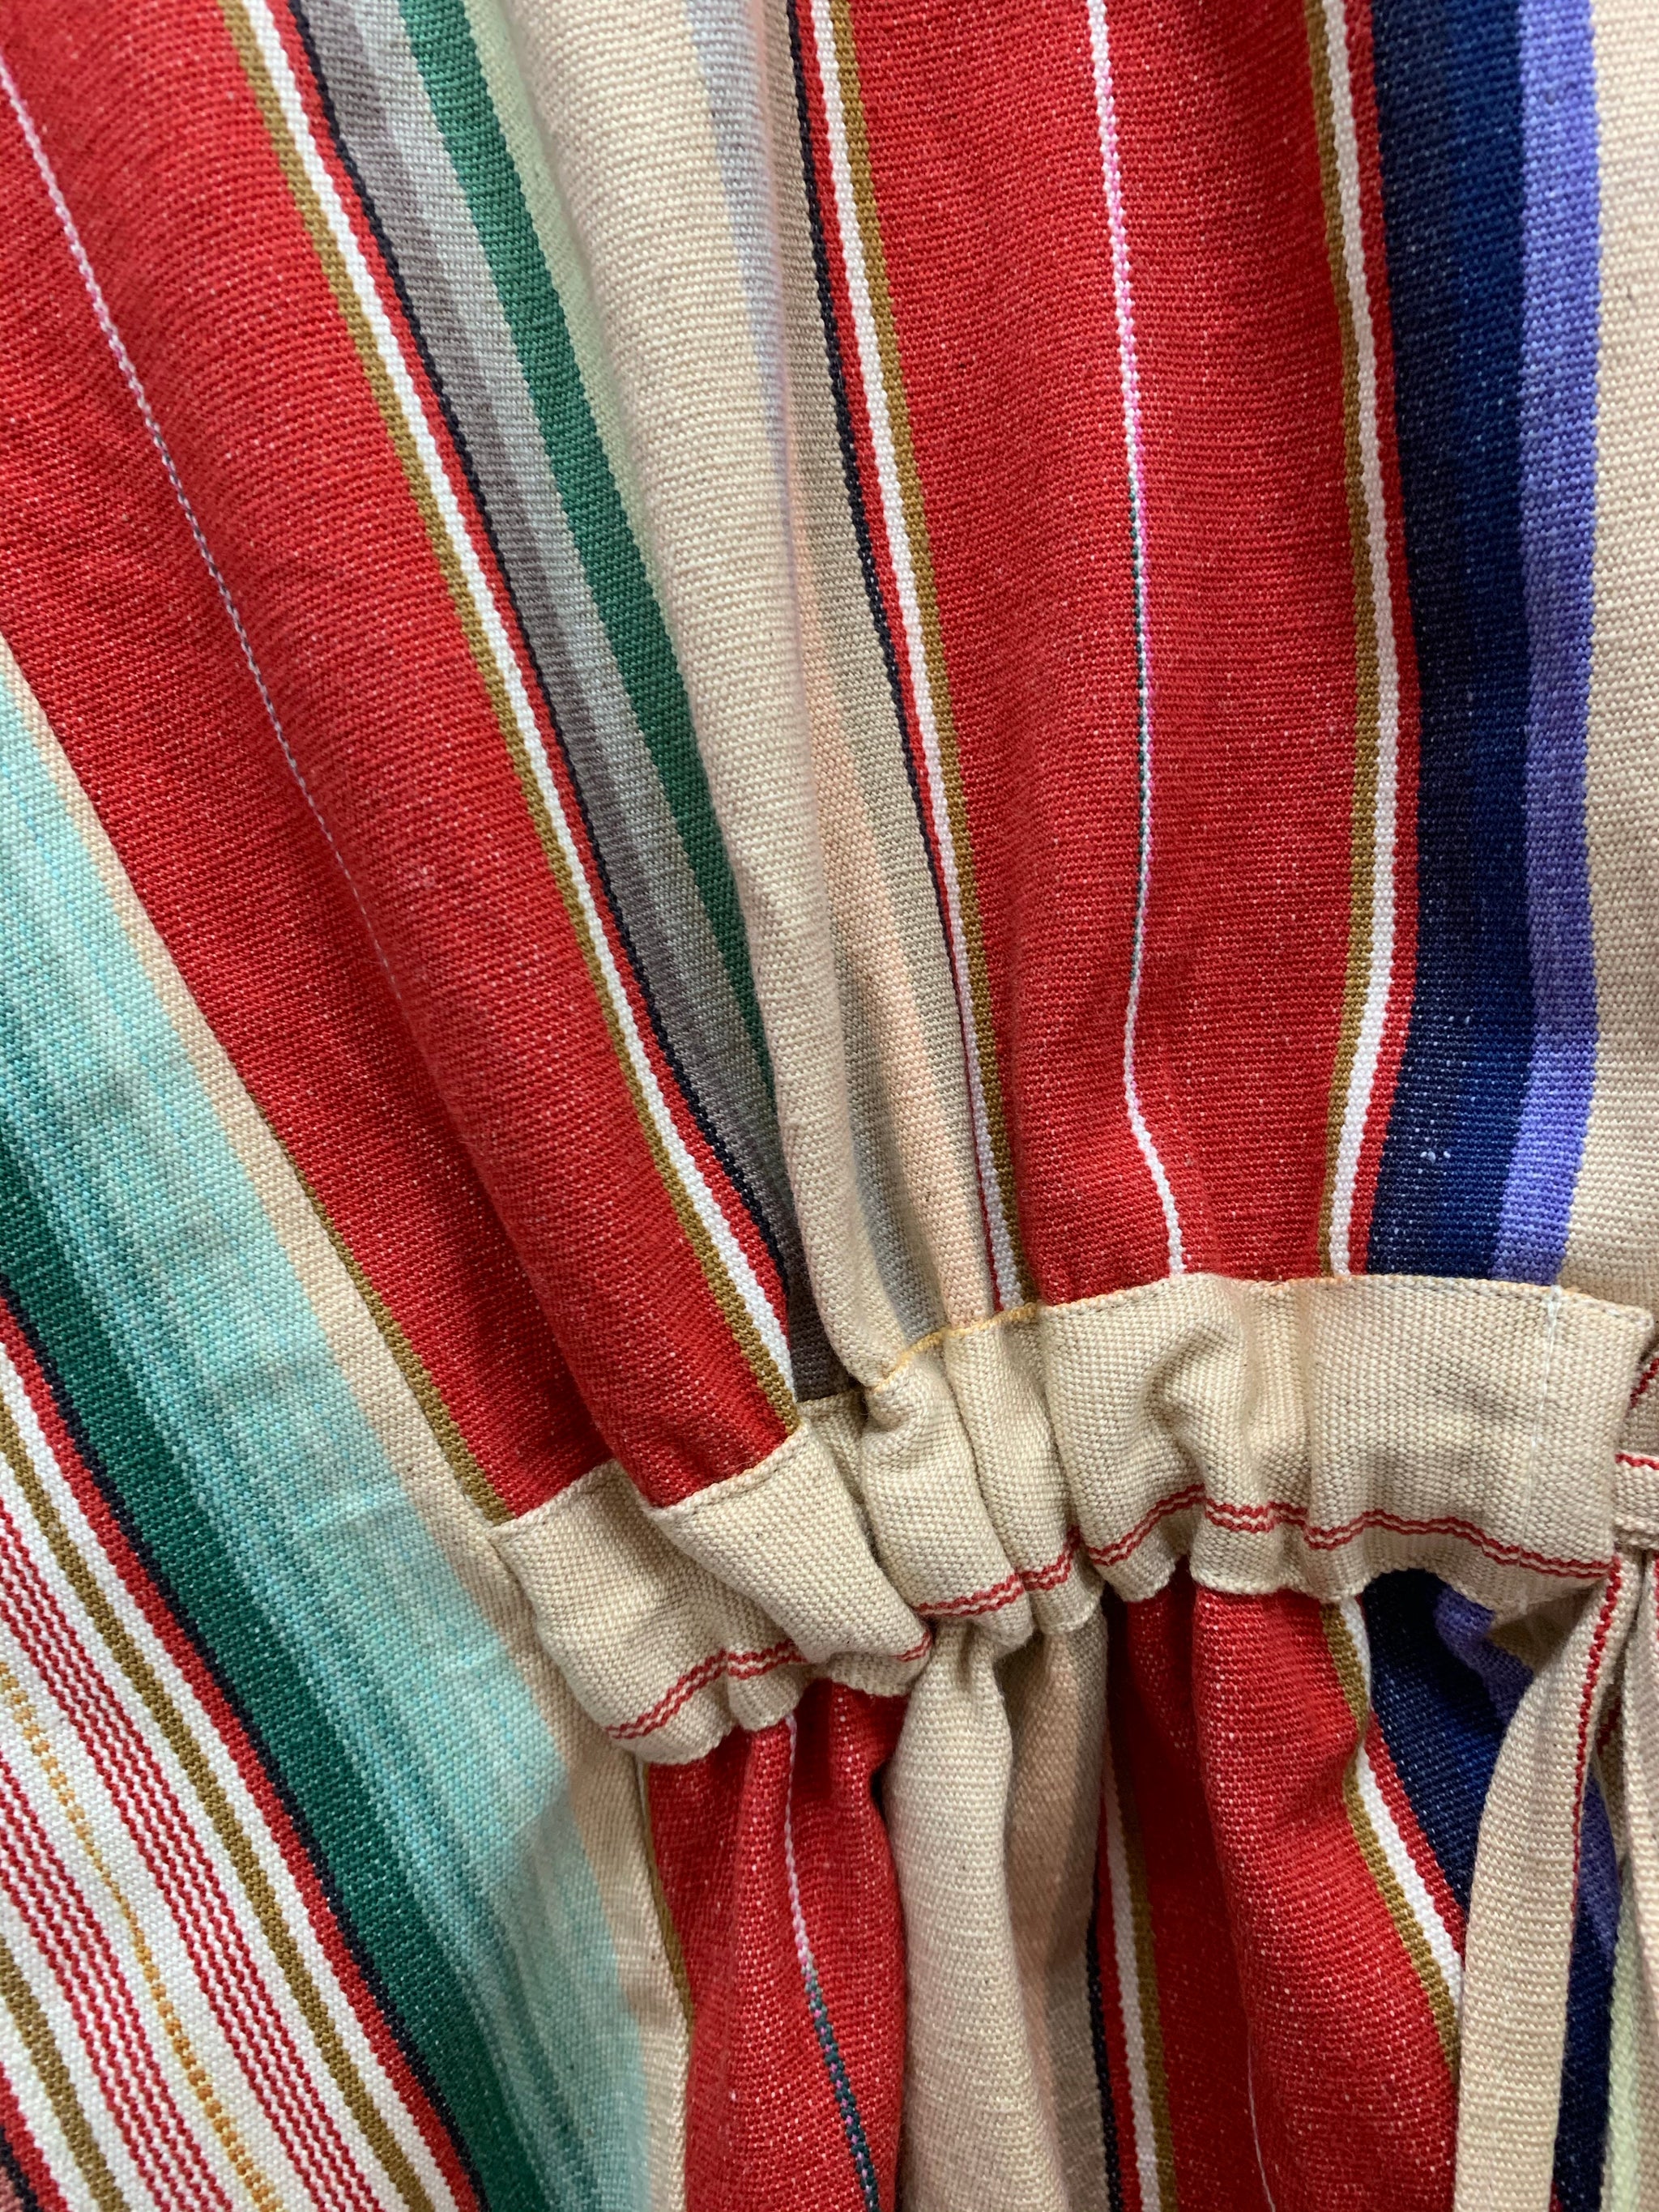 Fair Trade Colourful Cotton Short Kaftan Light Towel Adult